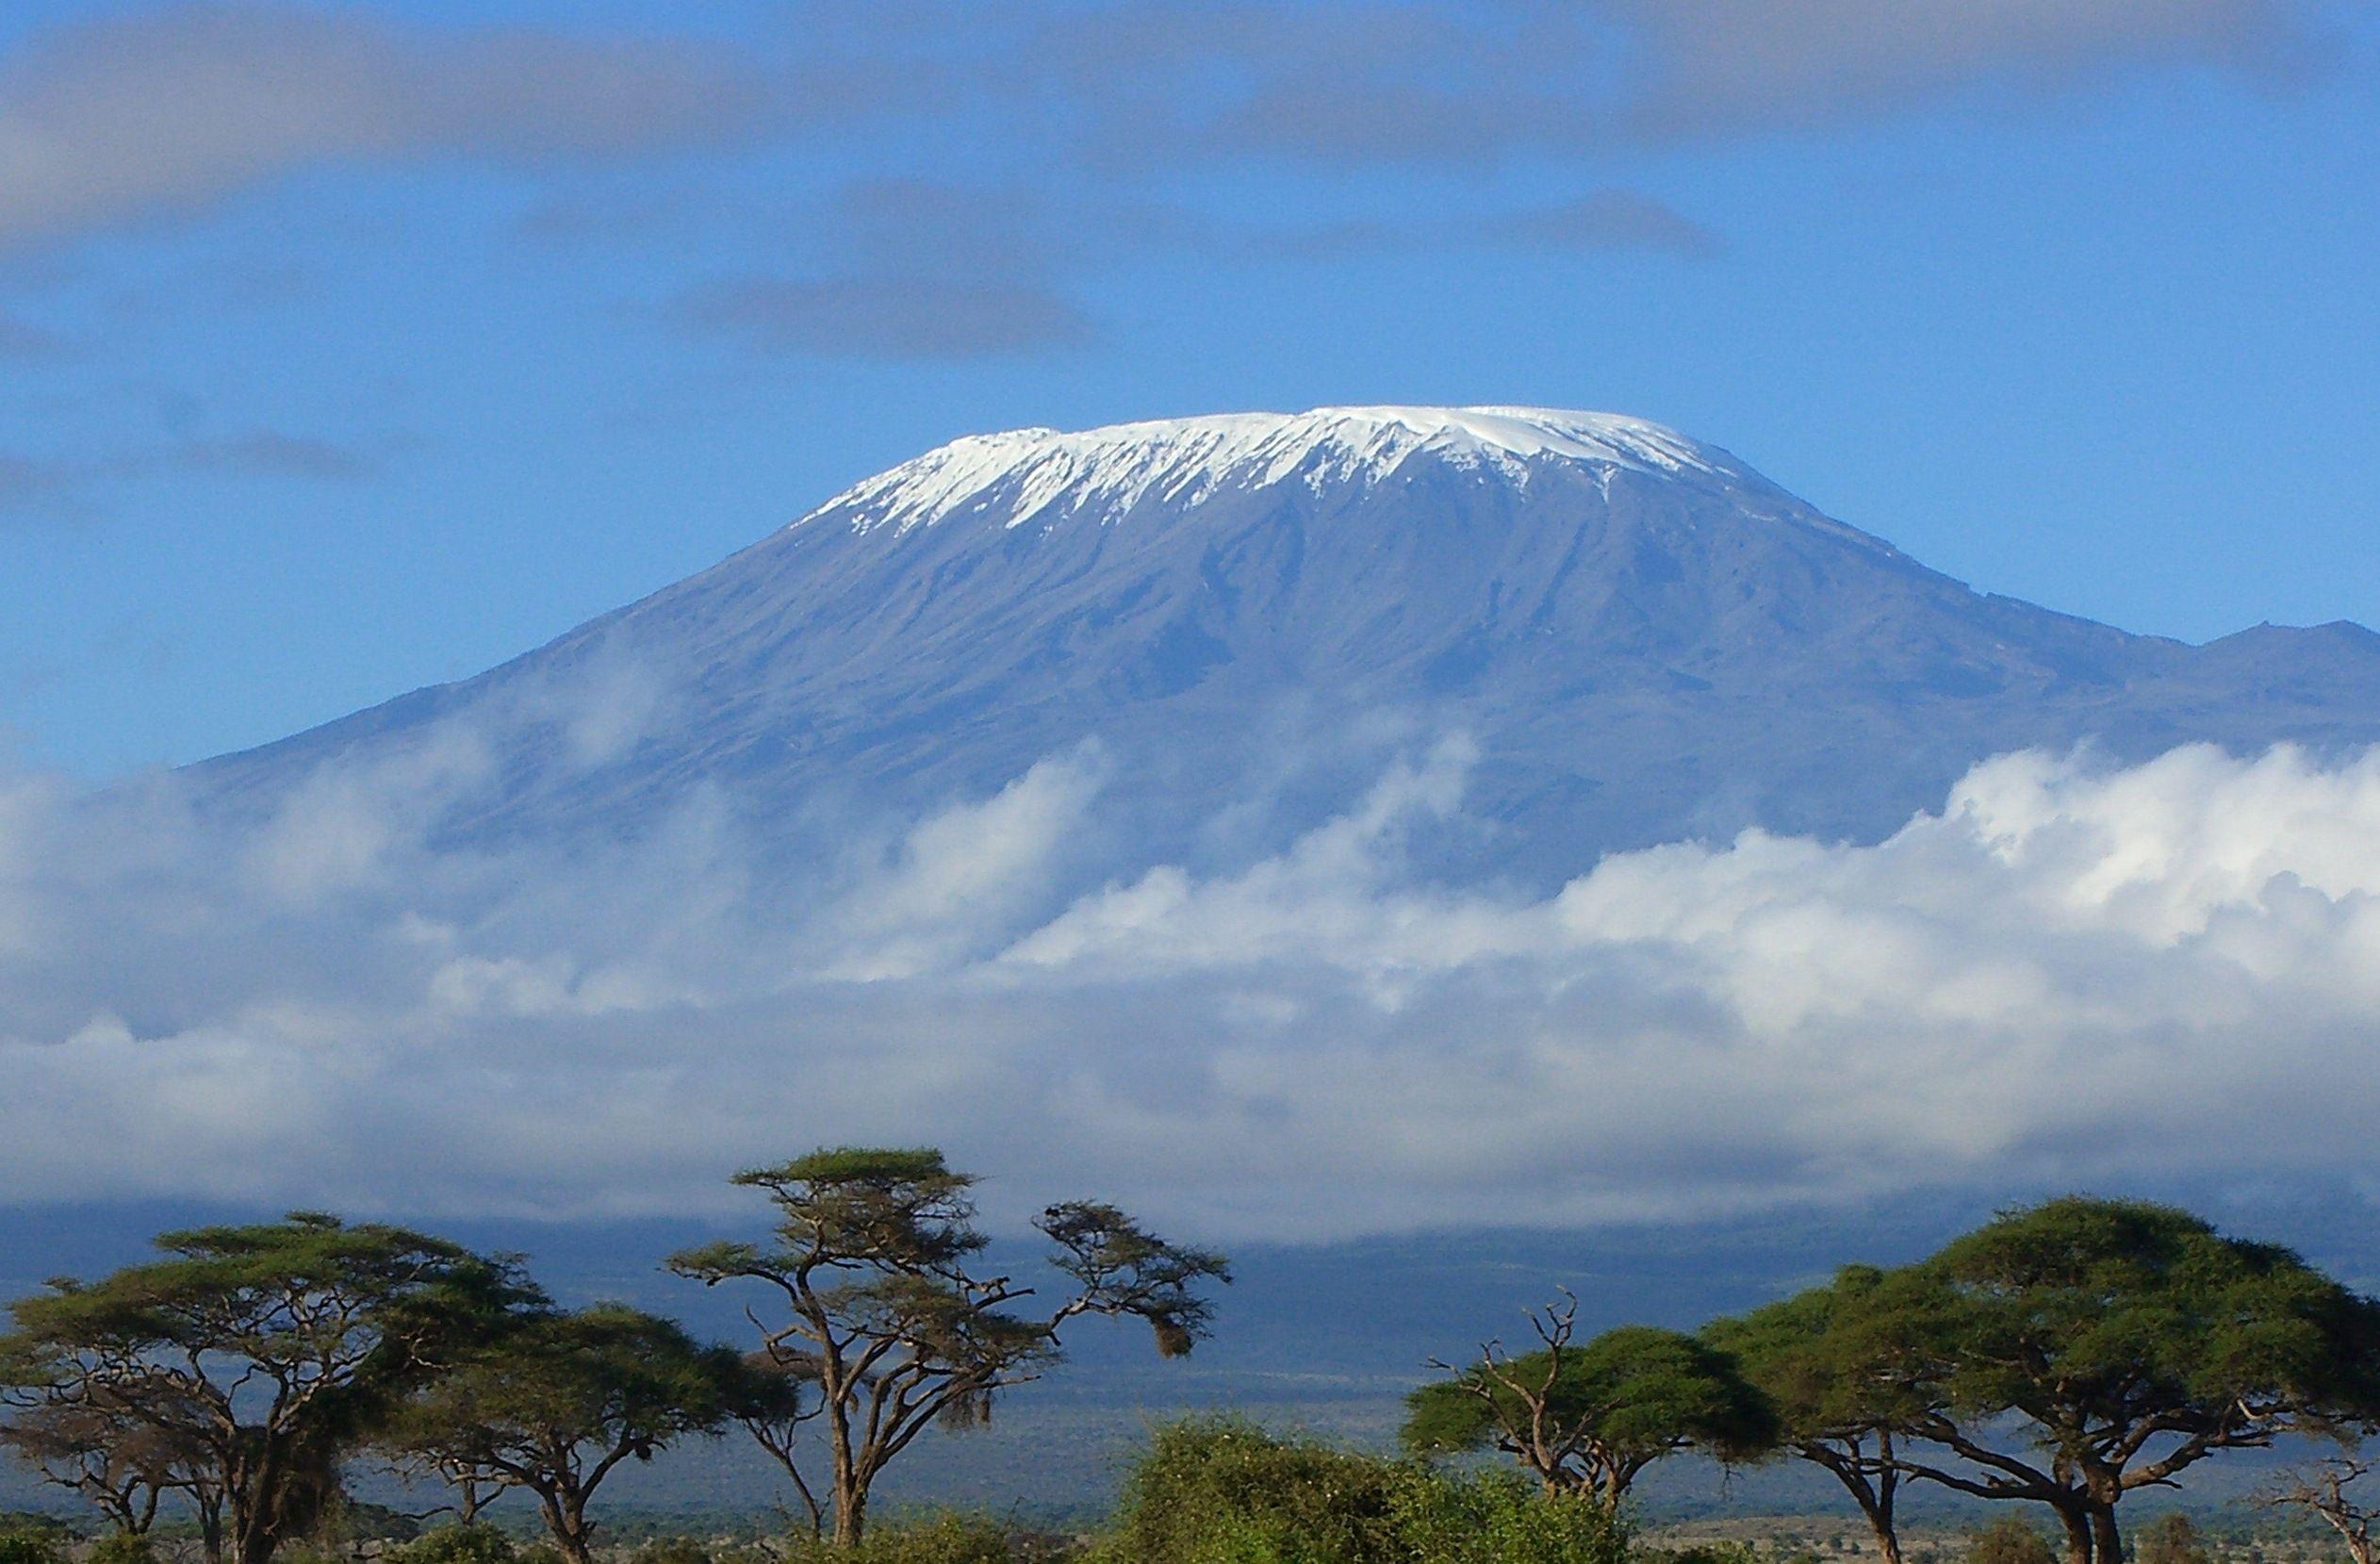 Mountain Kilimanjaro Wallpaper Image Photo Picture Background